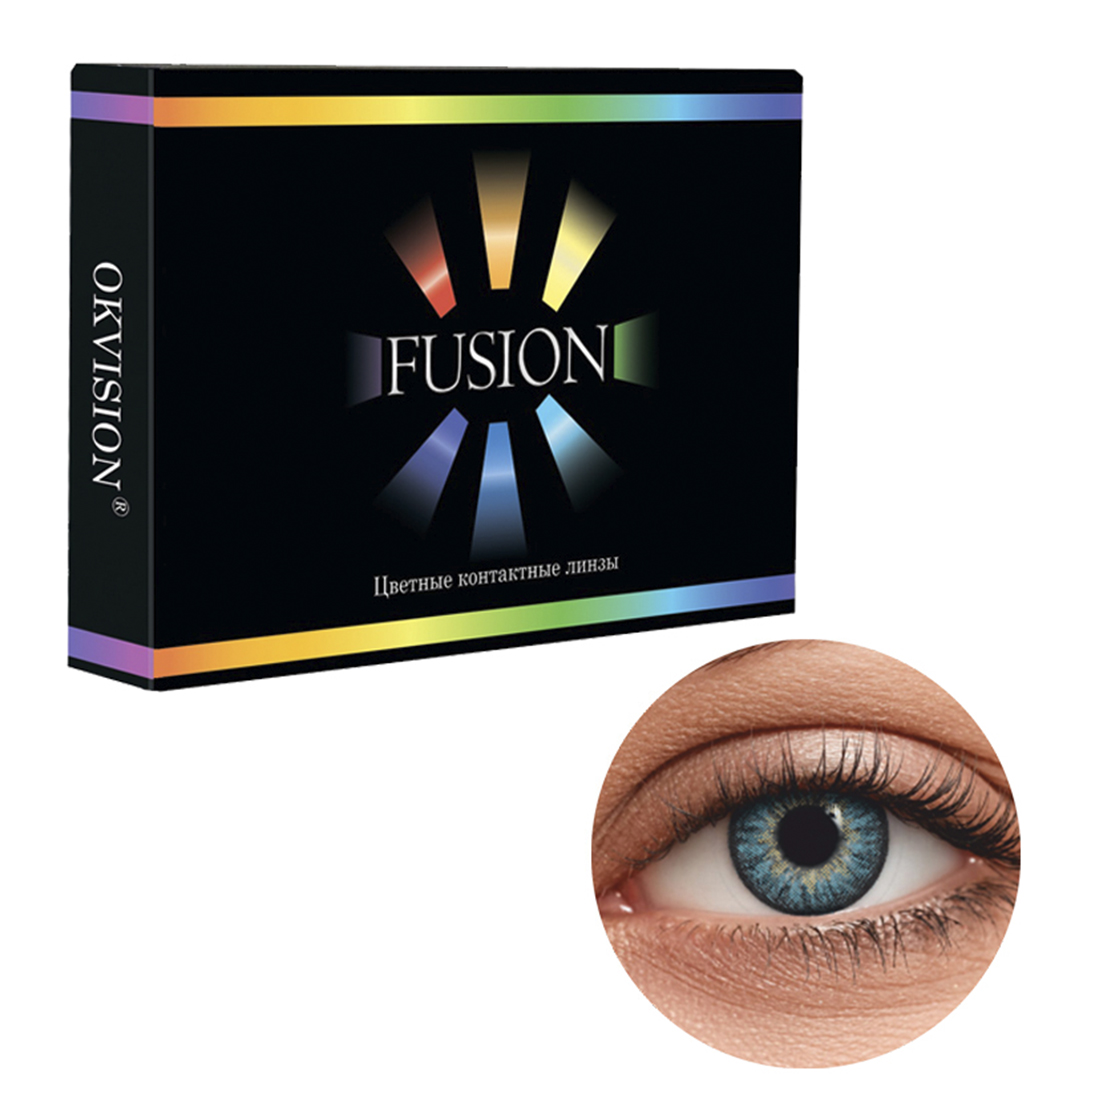 Цветные контактные линзы OKVision Fusion monthly R 8.6 -2.50 цвет Sky Blue 2 шт 1 месяц - фото 1